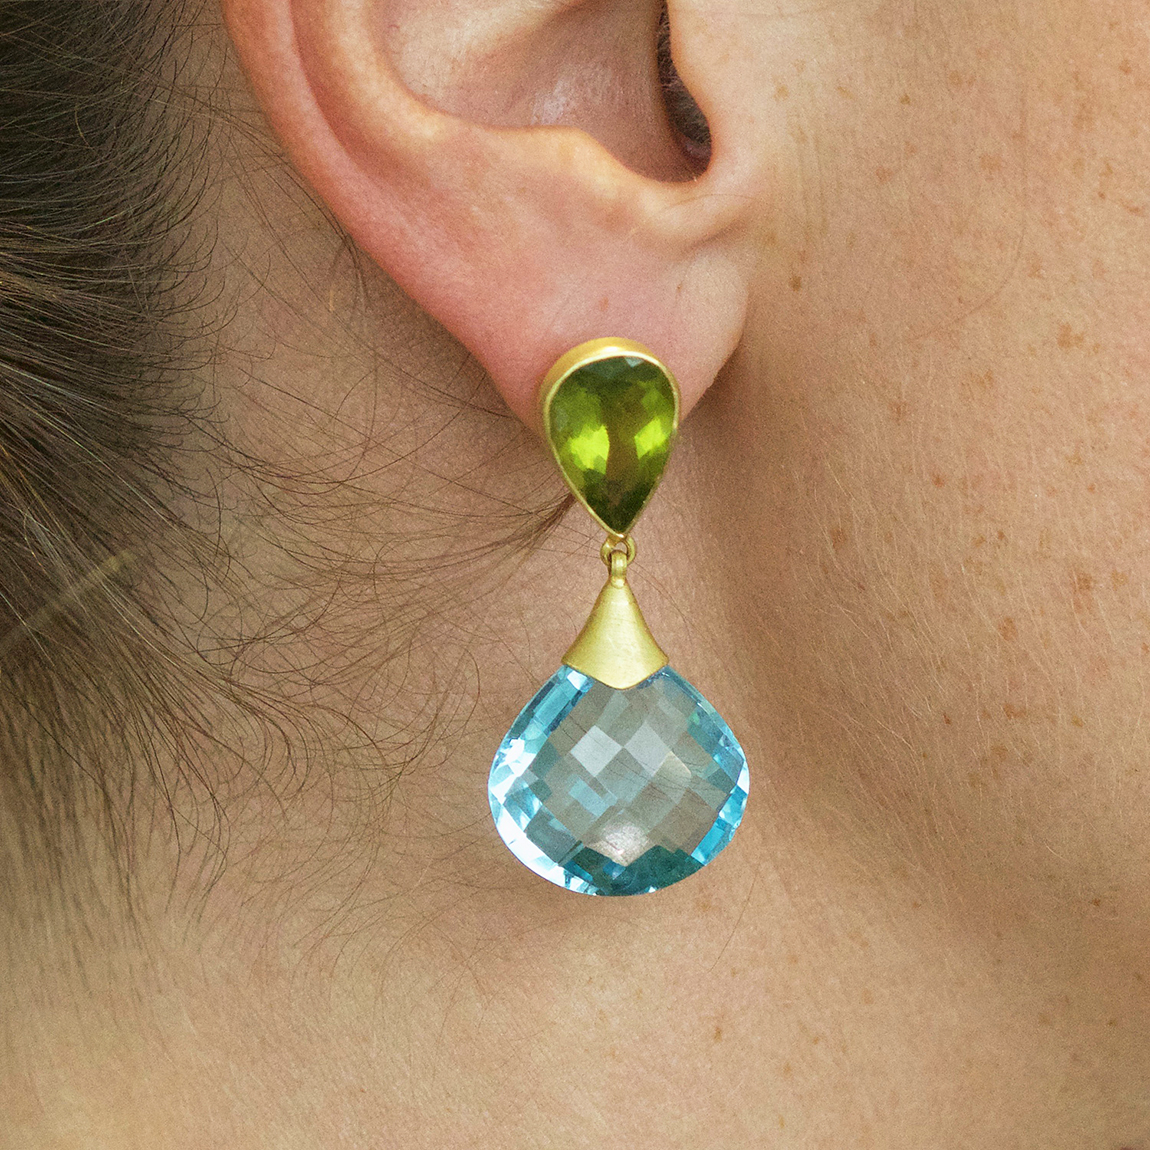 Trillion Cut 7.18 ctw Aquamarine & Diamond 18kt White Gold Earrings